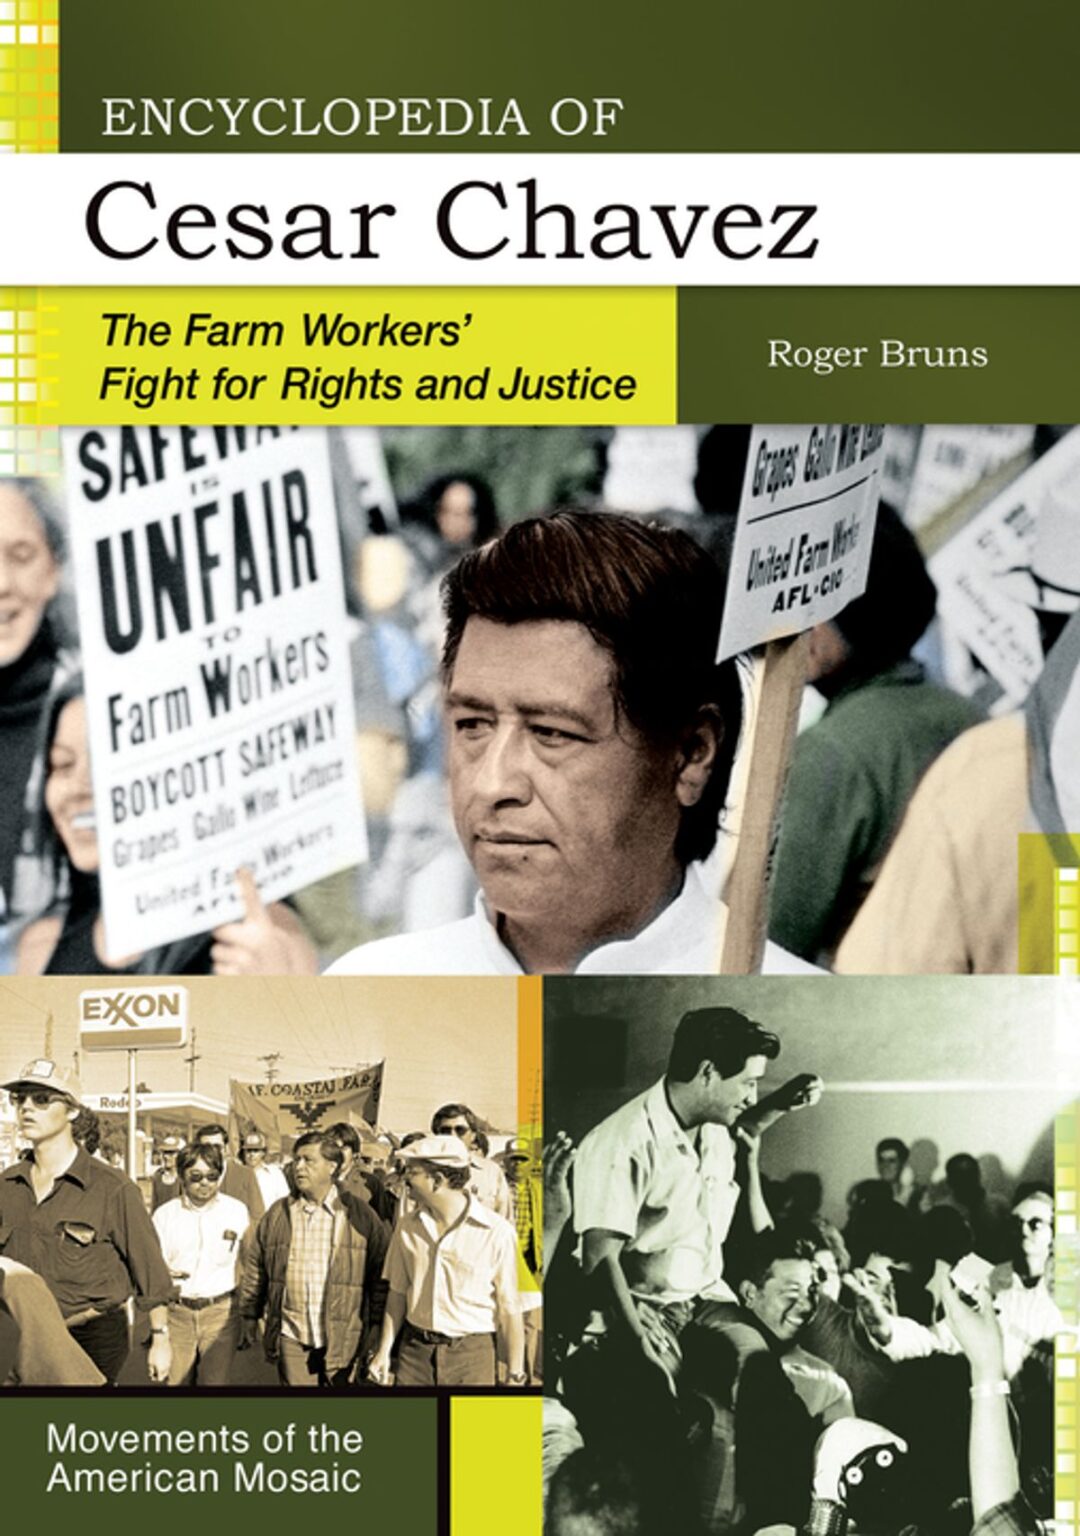 Celebrating César Chávez Day! University of Texas Libraries Diversity